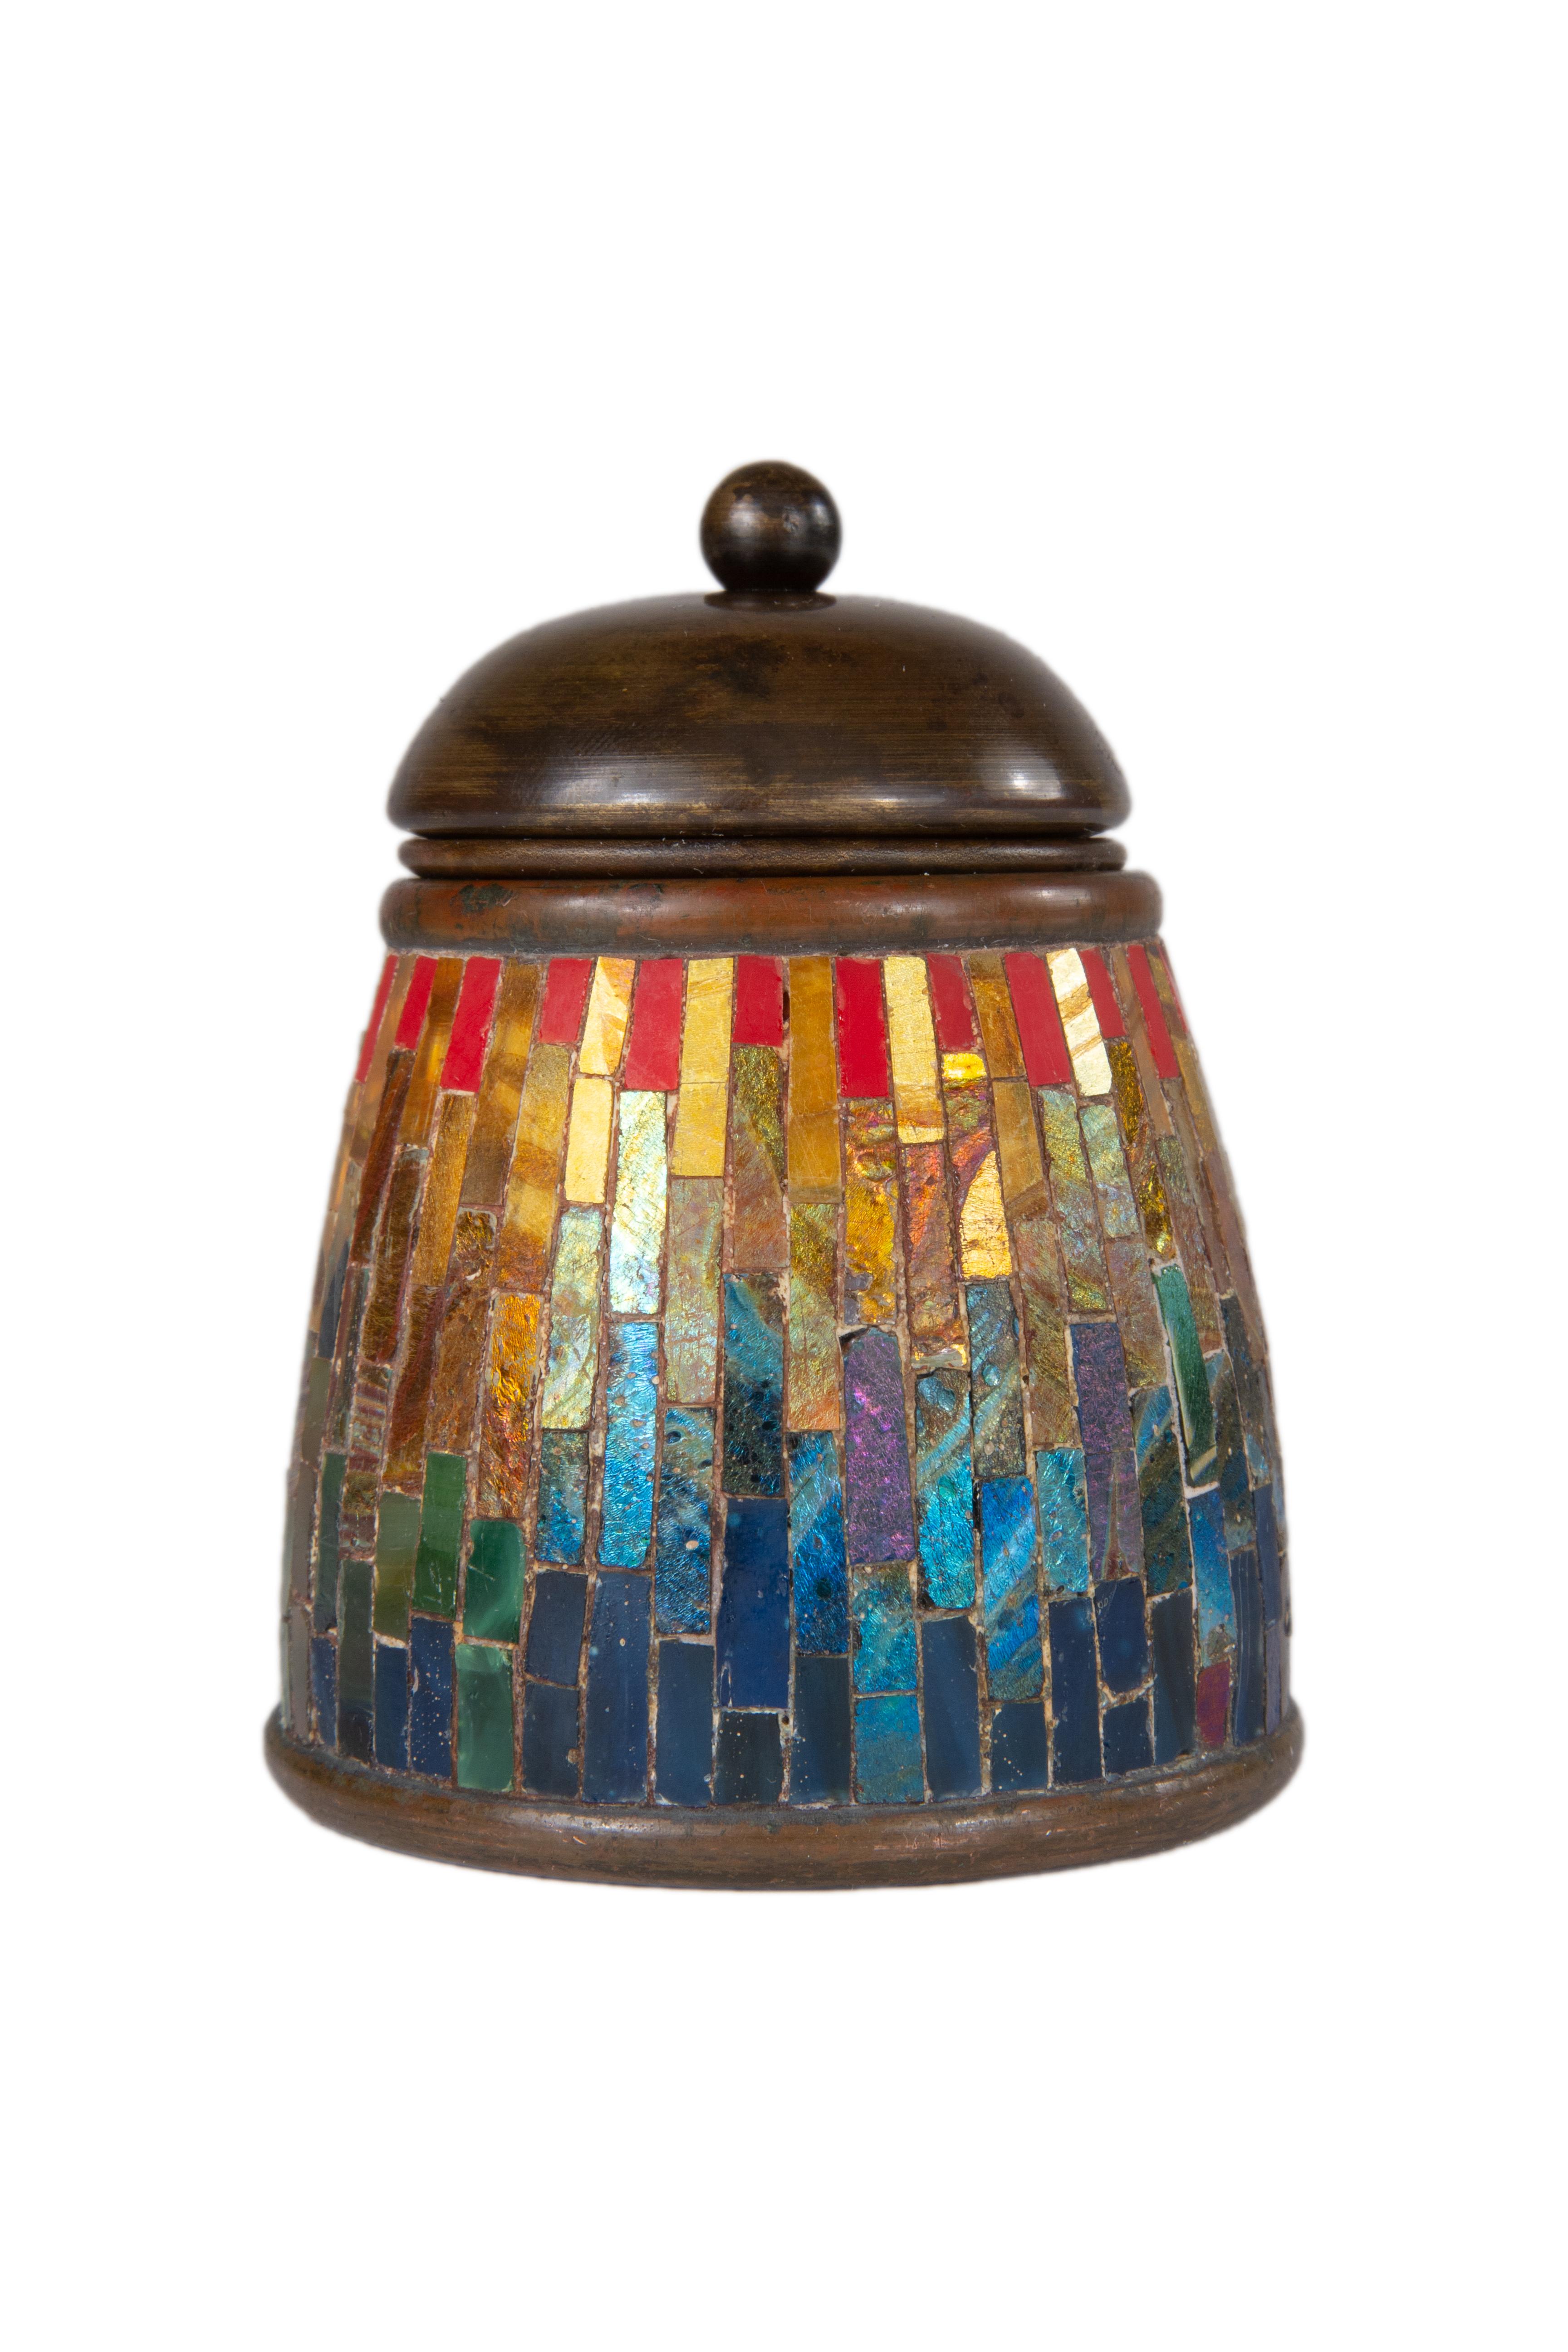 Art Nouveau Extremely Rare and Important Tiffany Studios Mosaic Matchholder